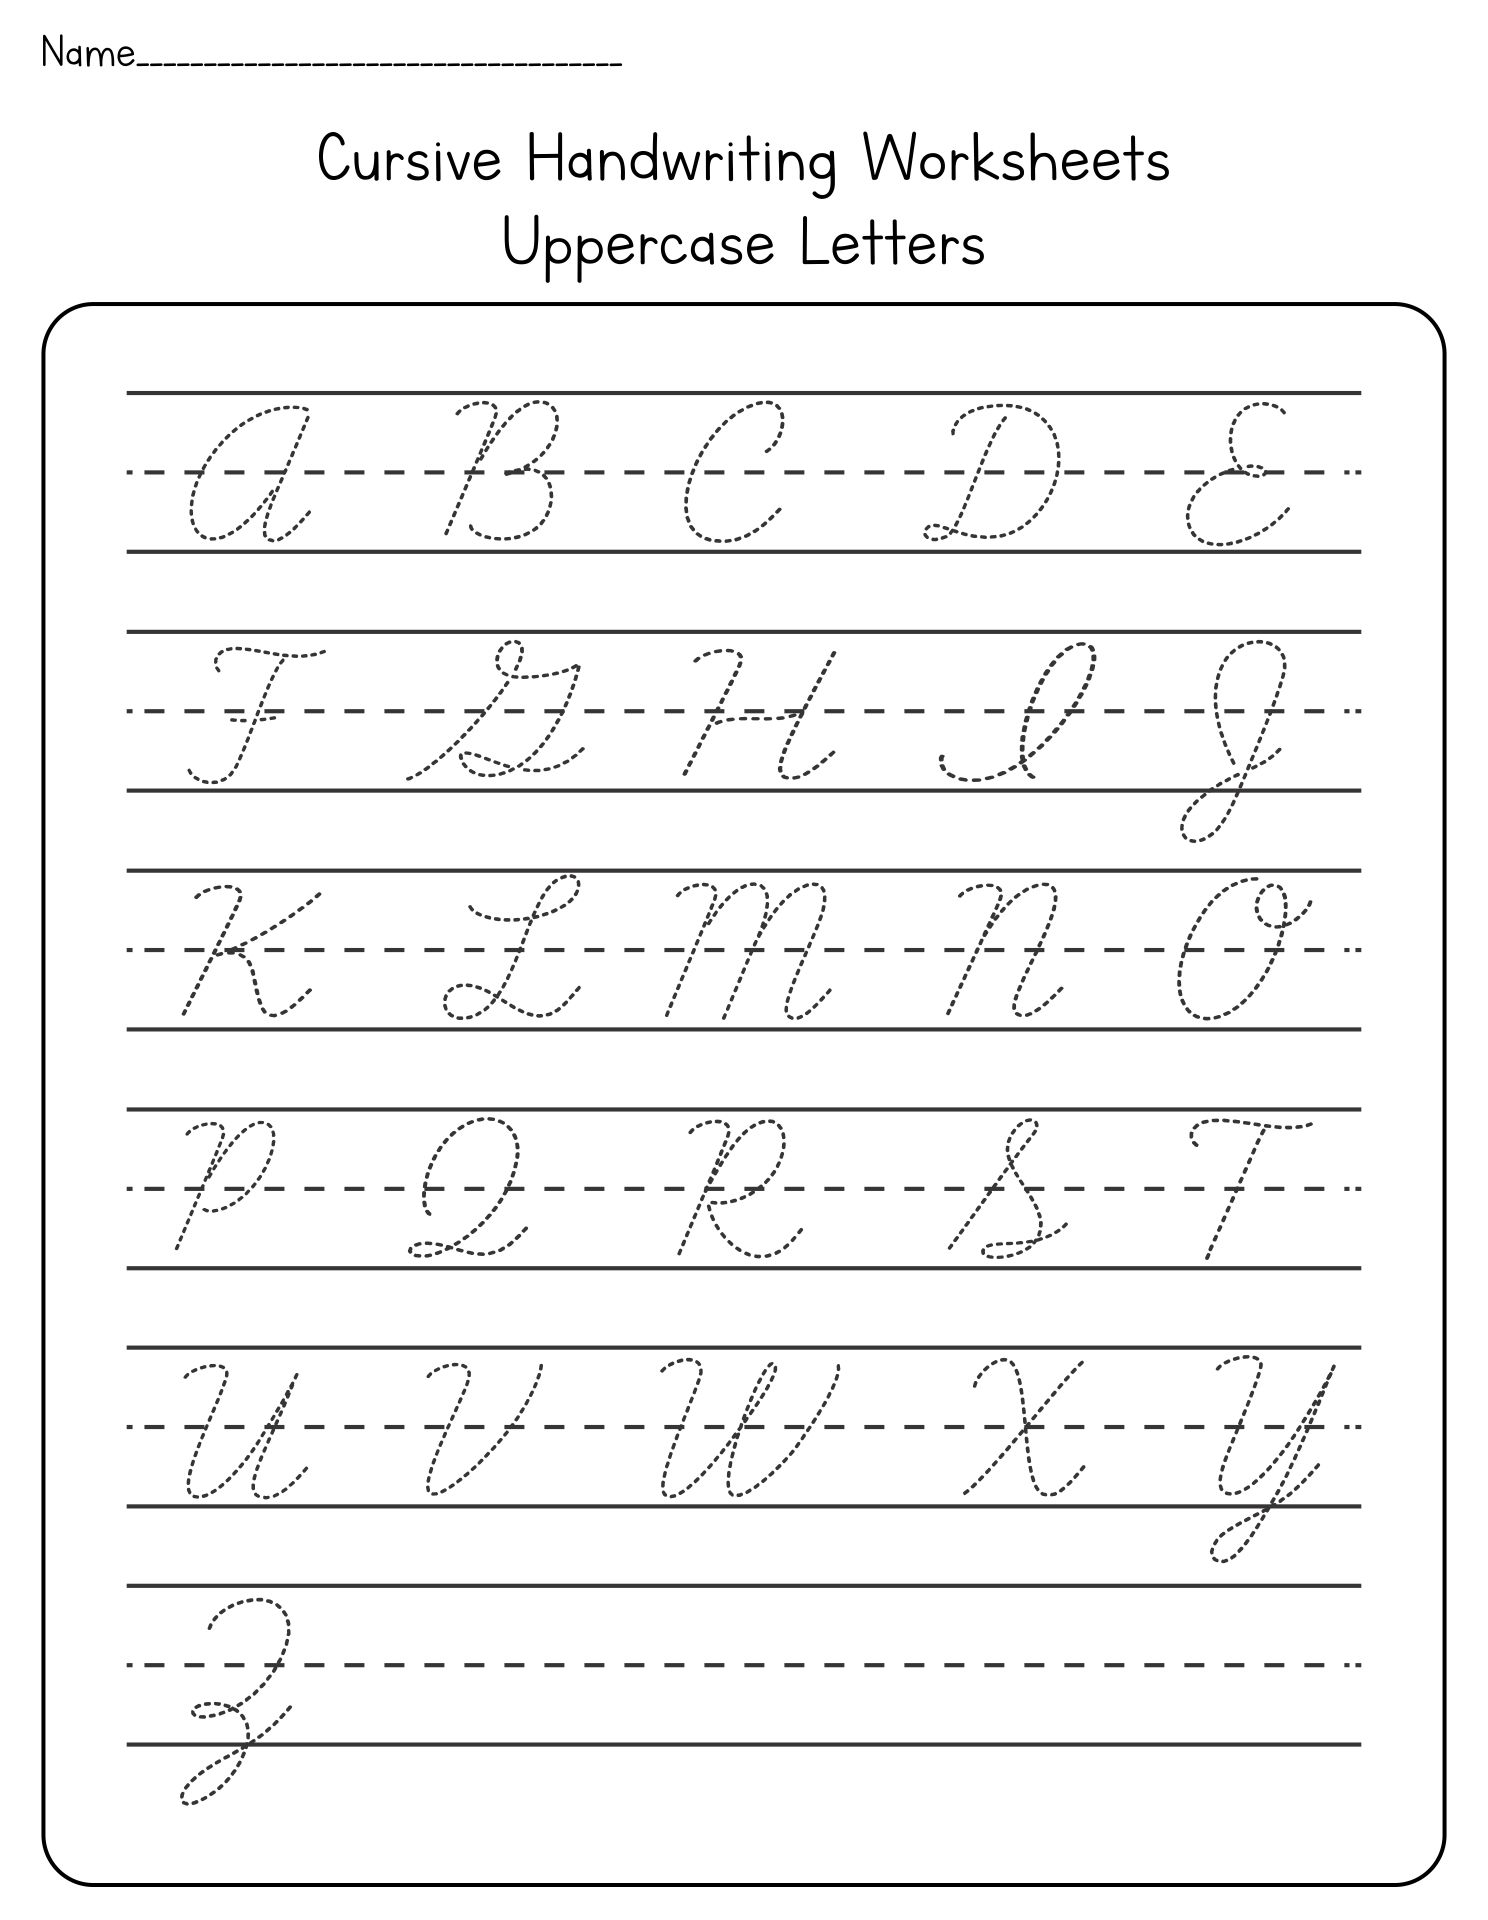 27-best-cursive-writing-worksheets-images-on-pinterest-cursive